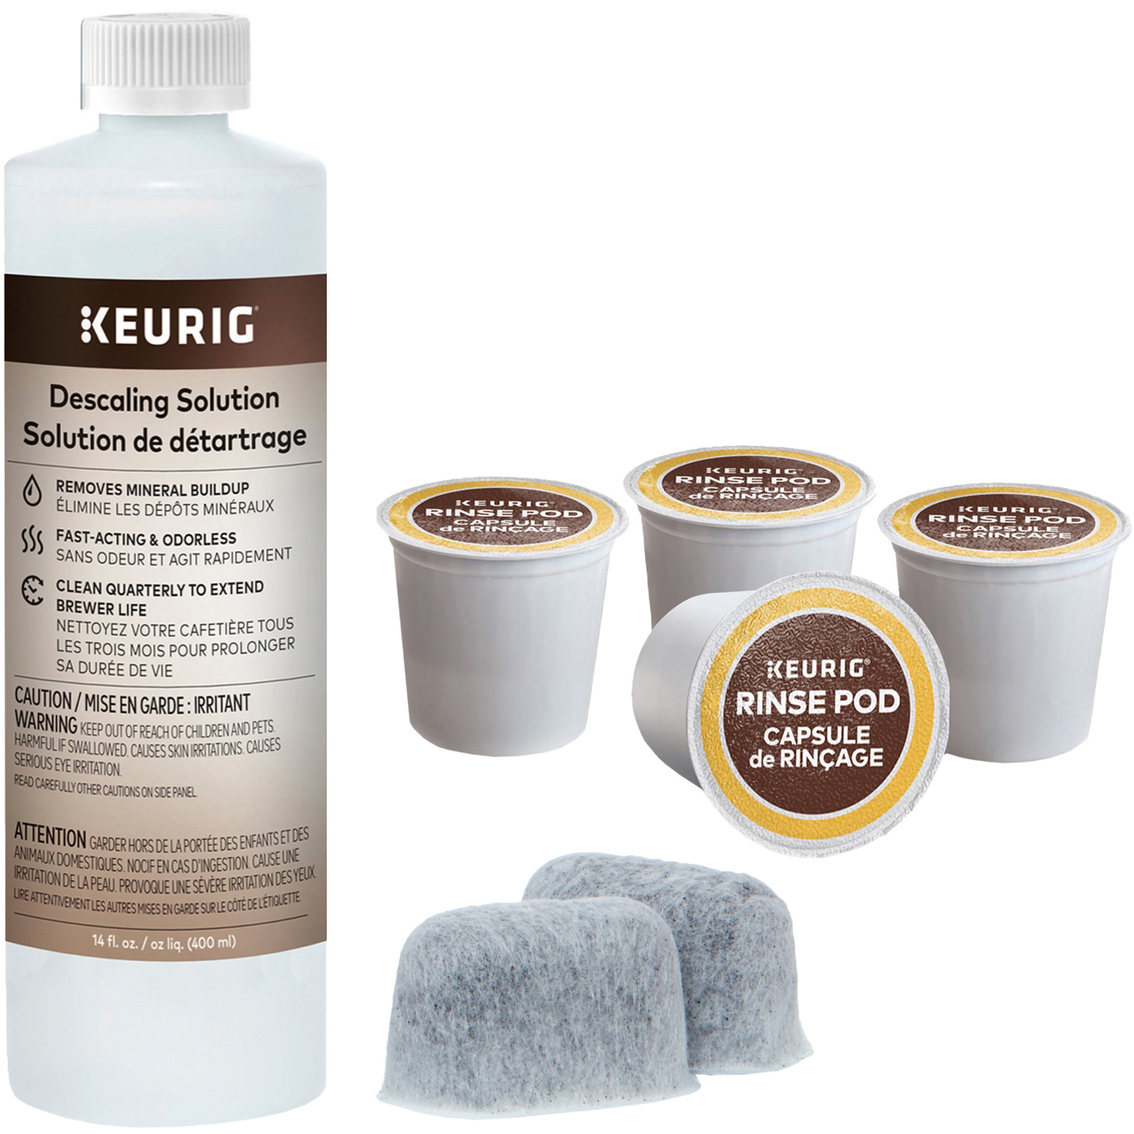 Keurig Brewer Care Kit - Image 2 of 2